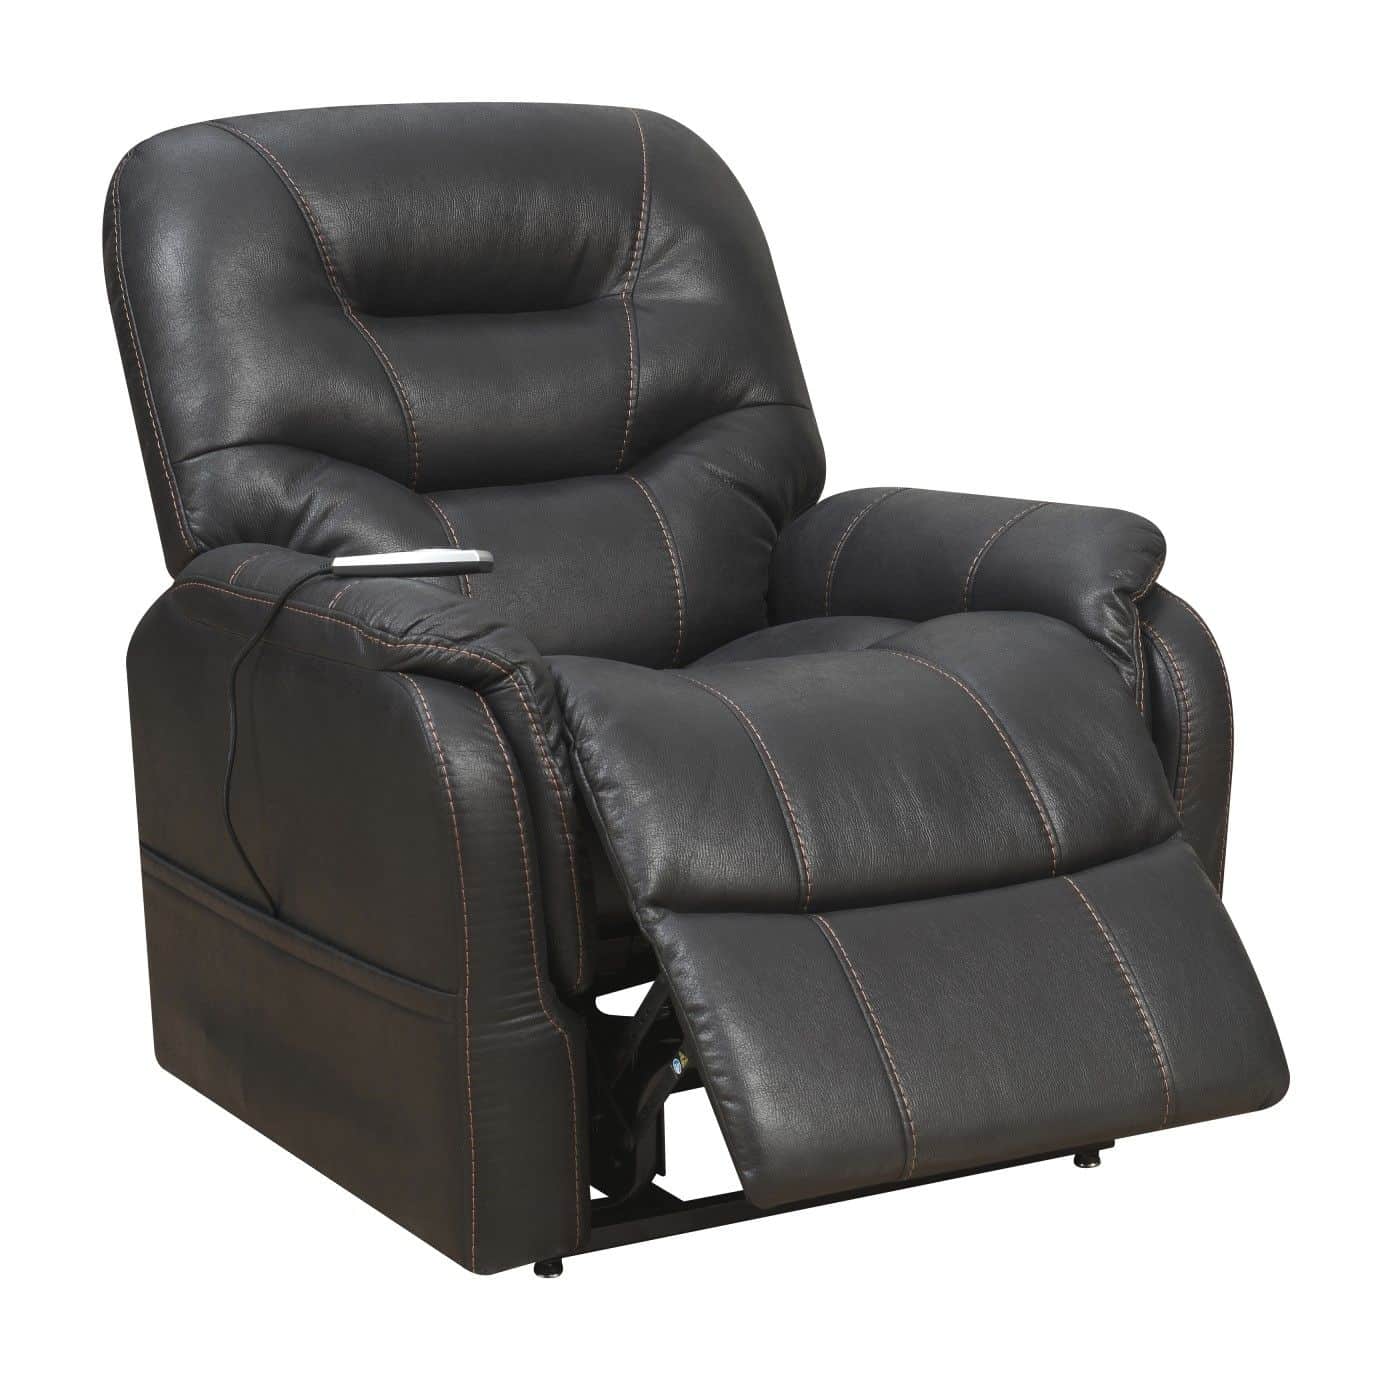 Heat& Massage Recliner Lift Chair Badlands Eclipse Leather Feel ...